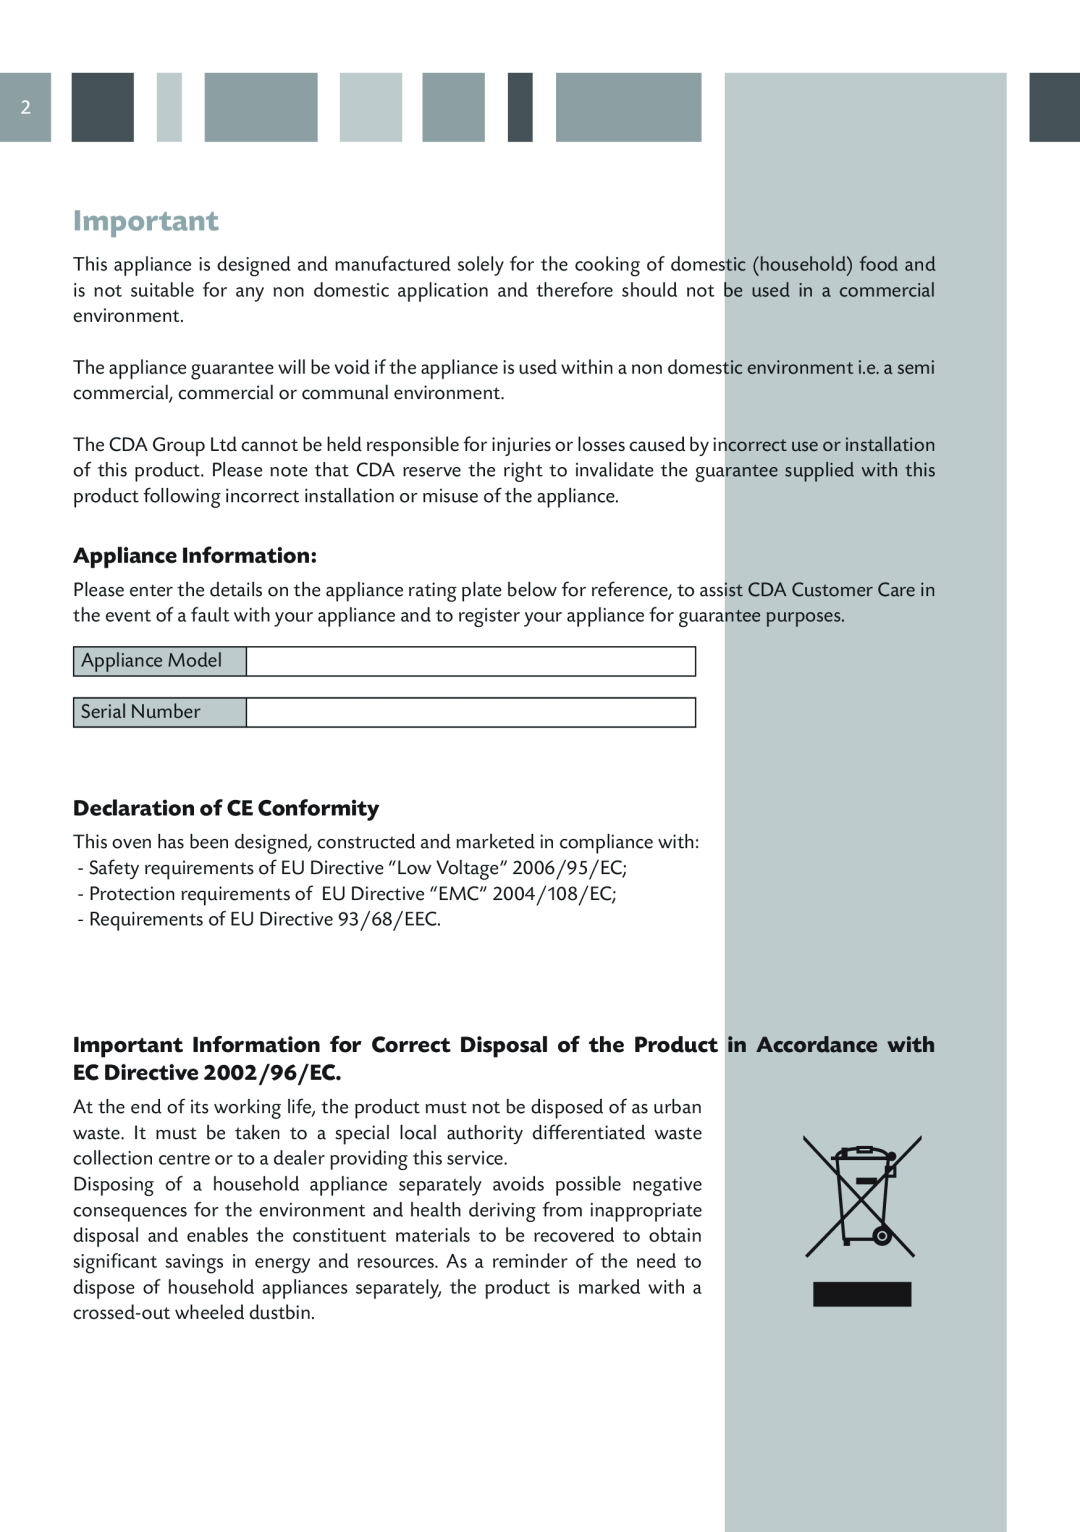 CDA SV 150R, SV 150L manual Appliance Information, Declaration of CE Conformity 